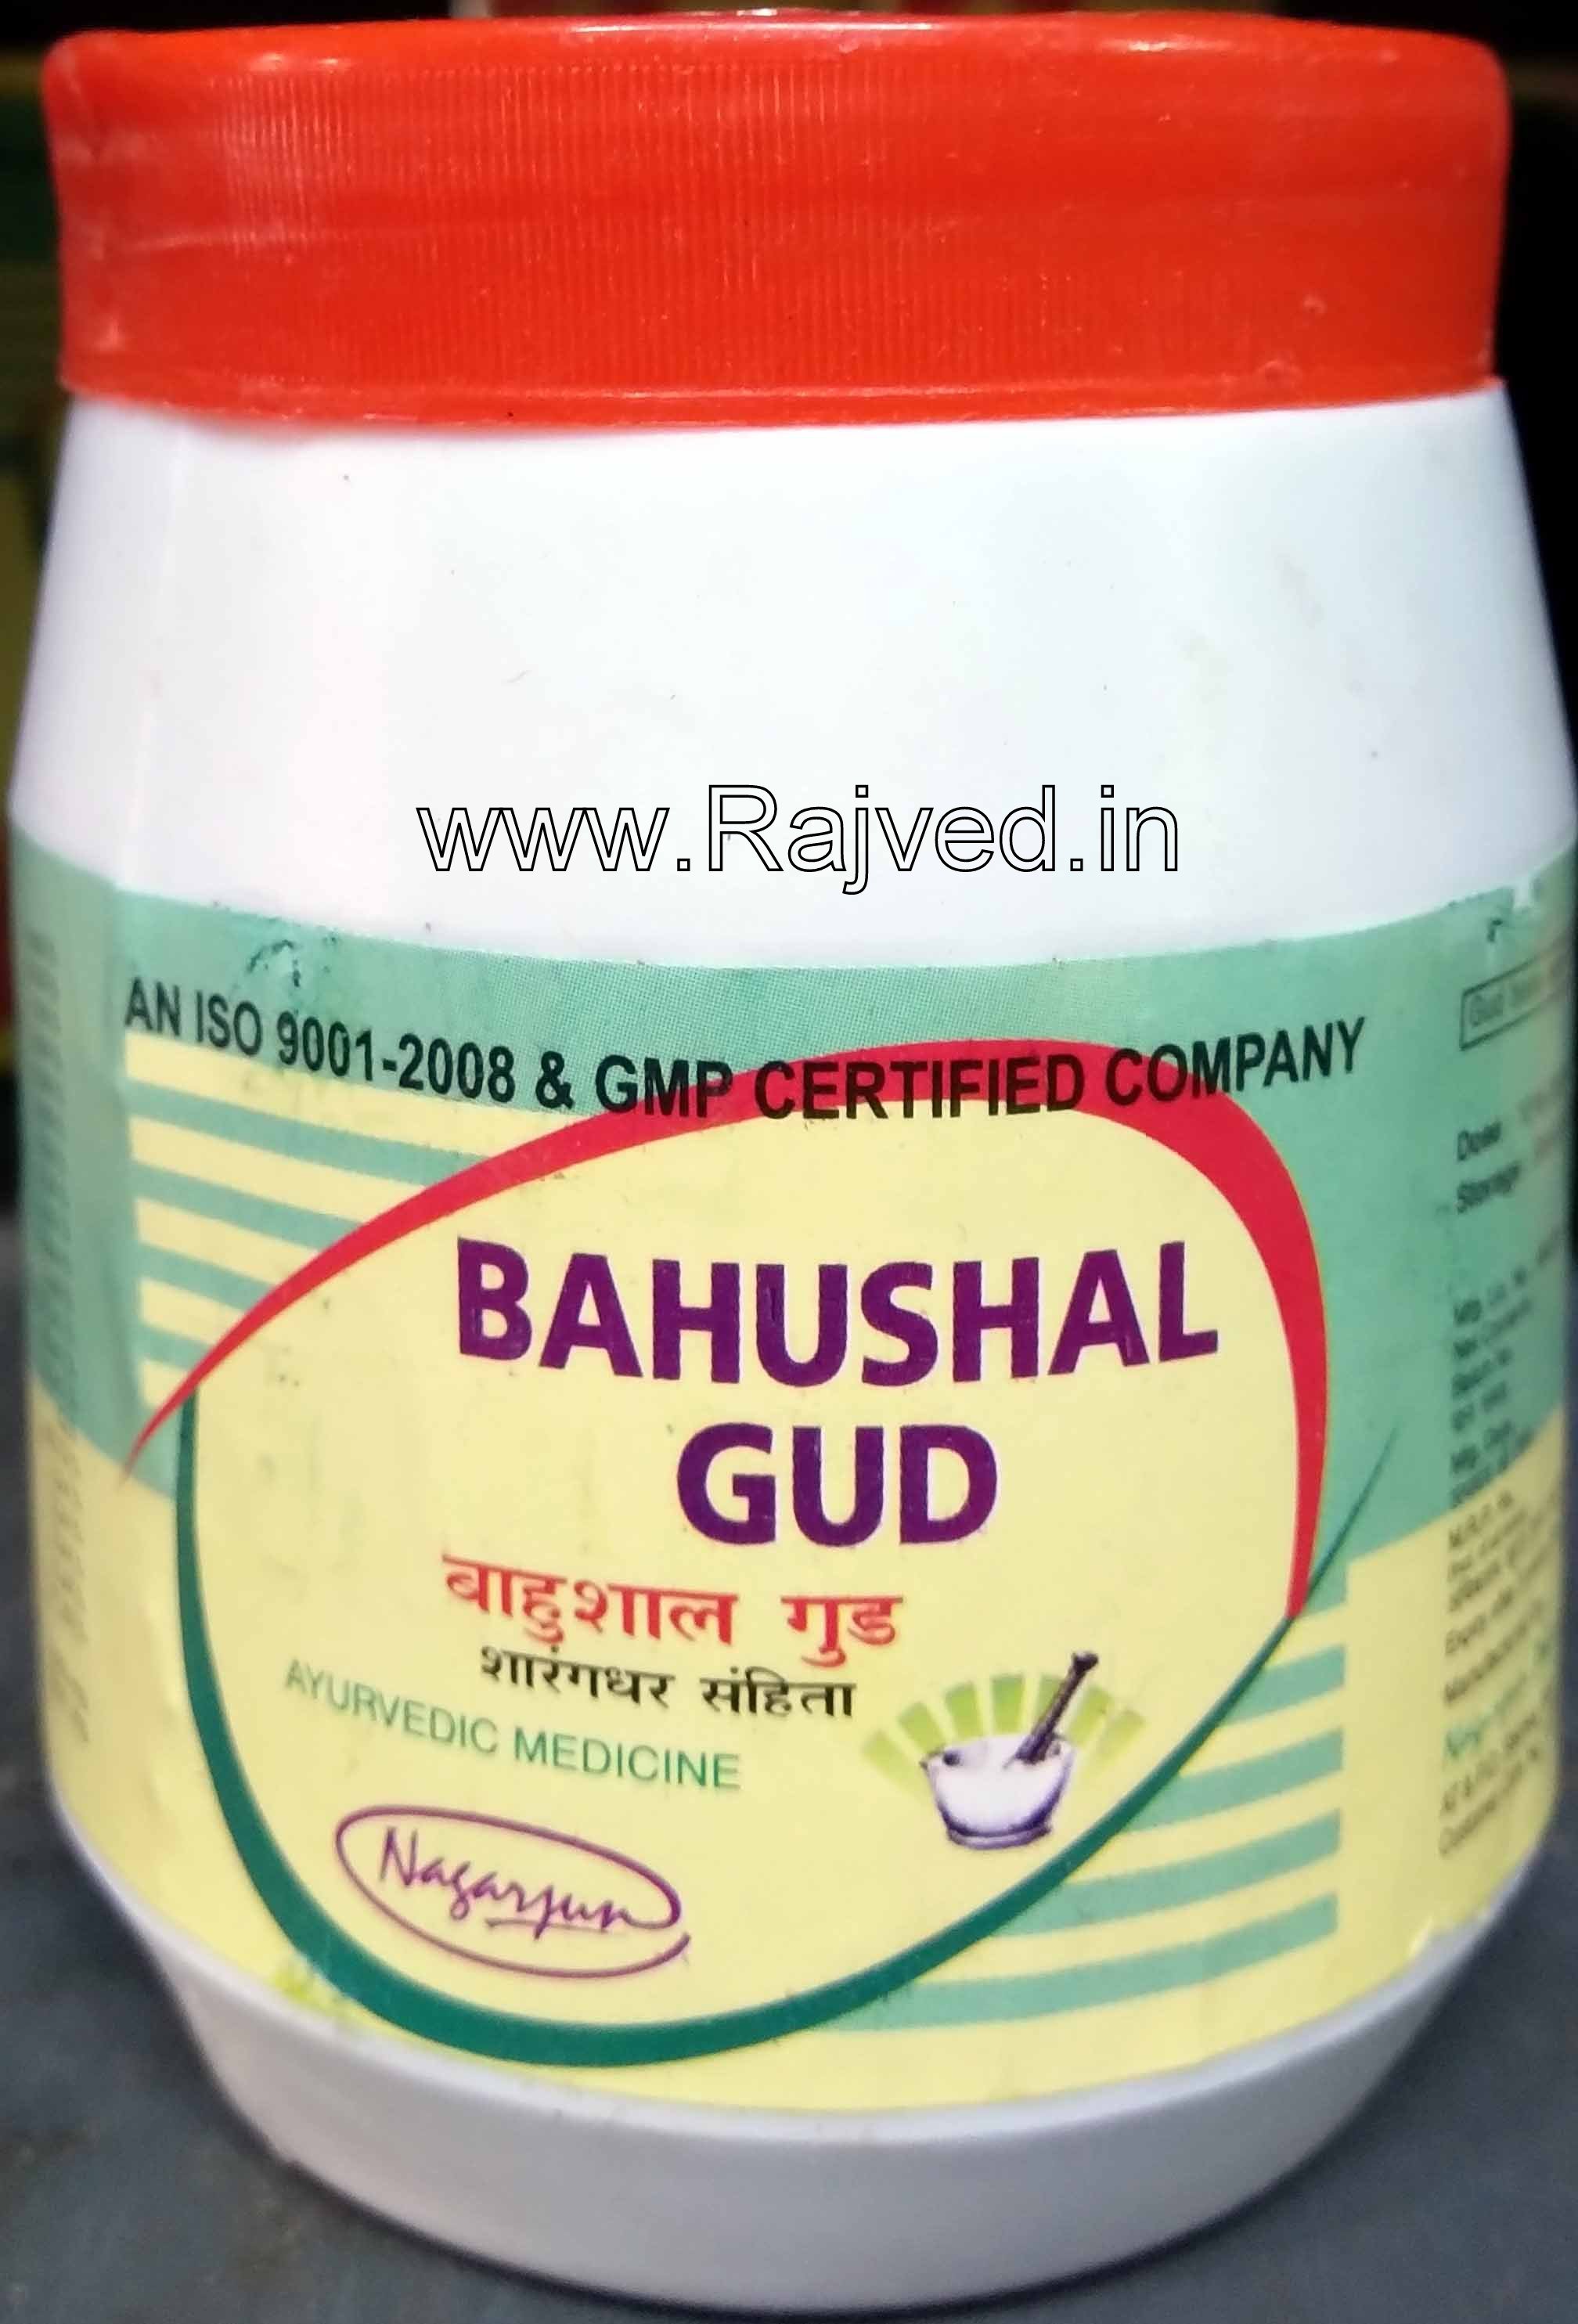 bahushal gud 400 gm upto 20% off Nagarjun Pharma Gujarat